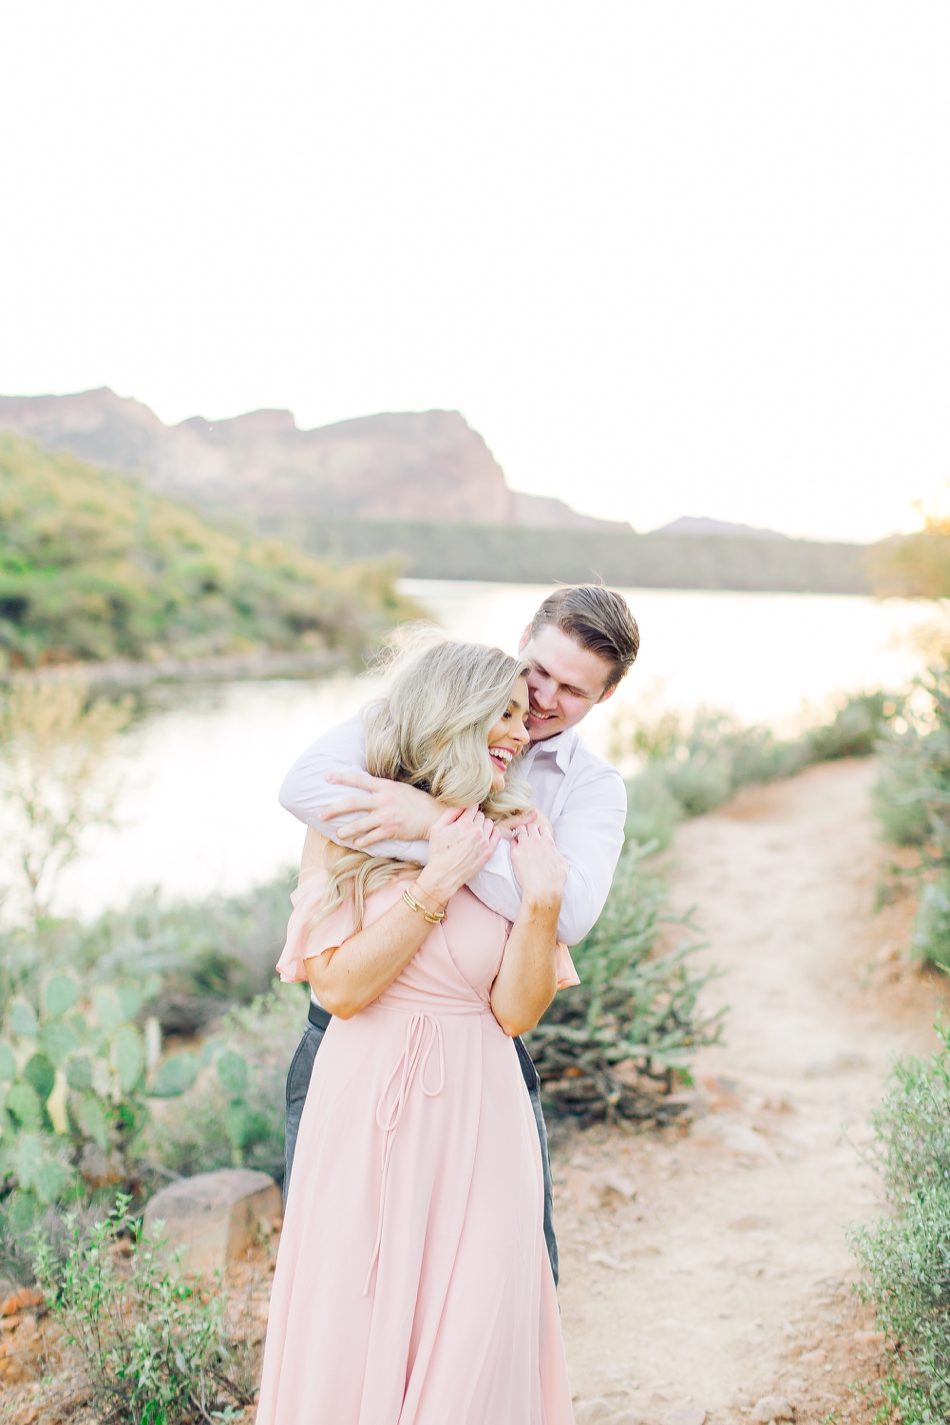 Jenna-and-Mike-Phoenix-Arizona-Engagement-Shoot-Lisa-Renault-Photographie-Destination-Wedding-Photographer_0012.jpg